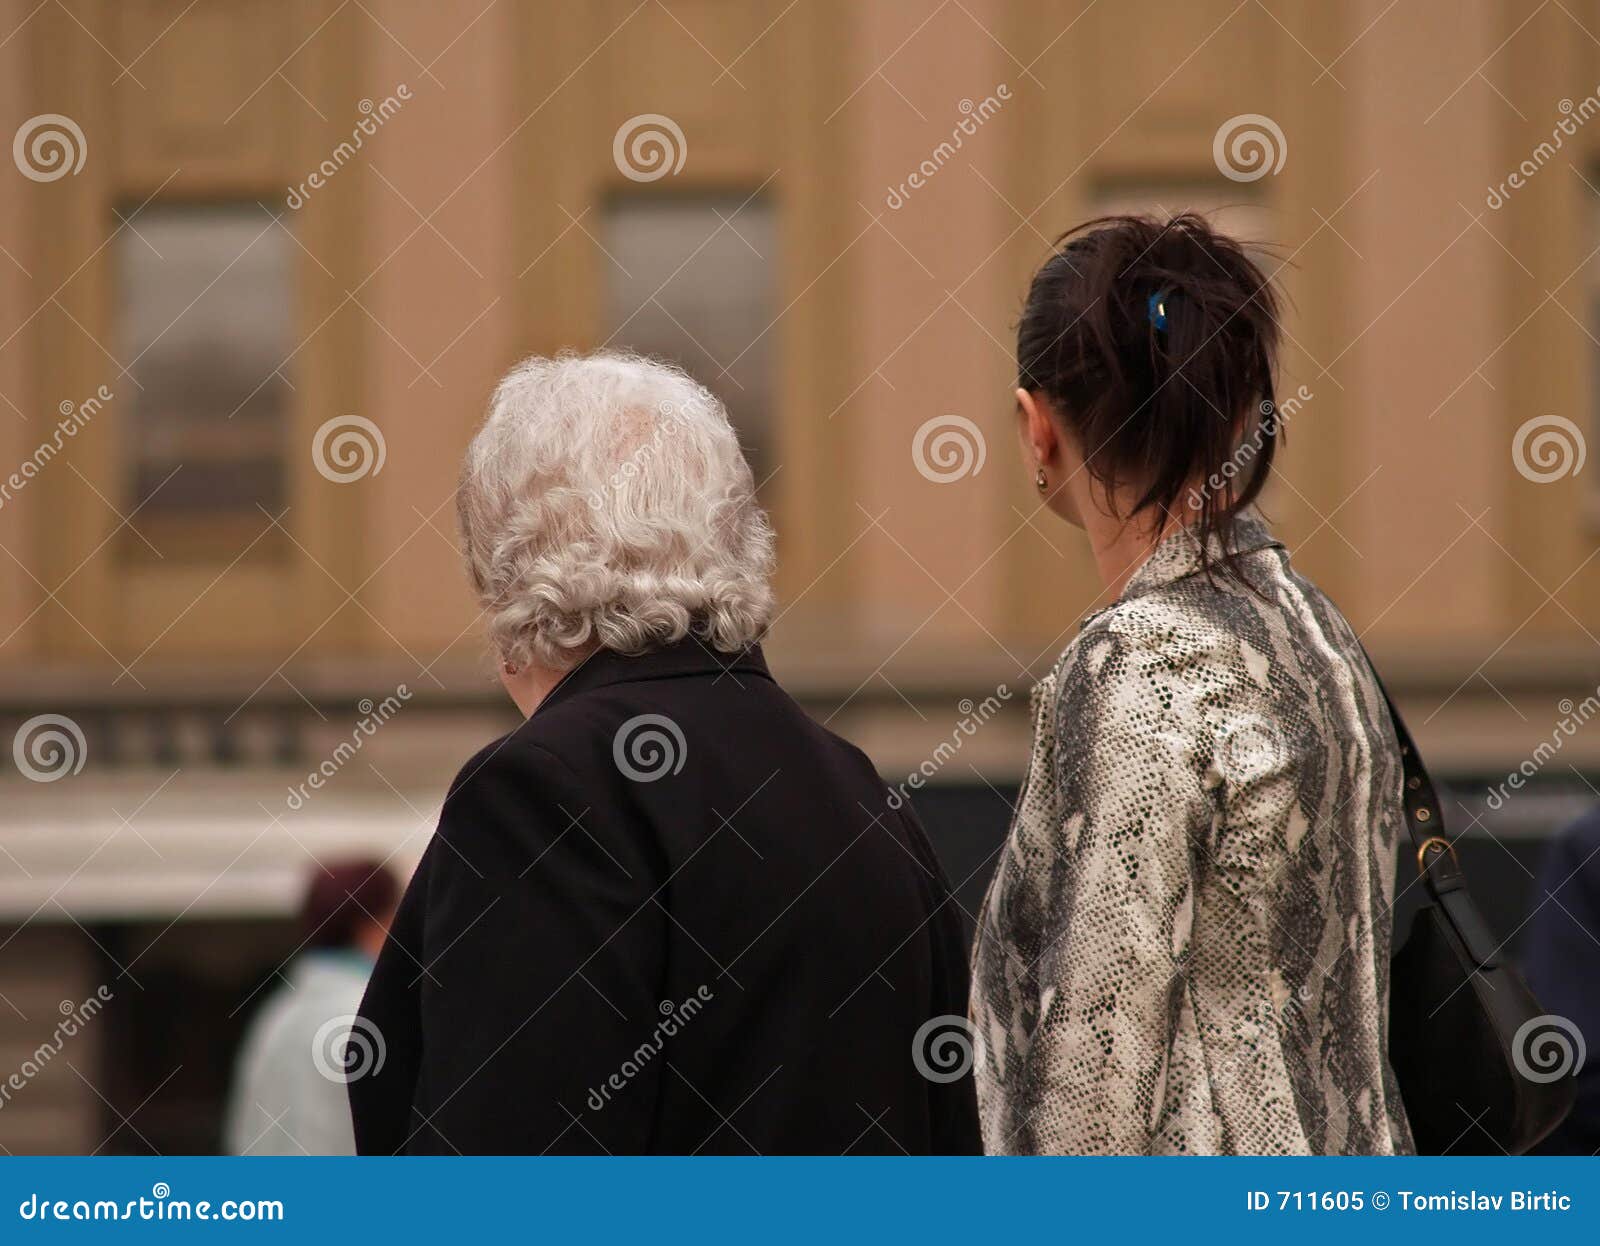 Old Woman And Young Girl Stock Image Image Of Adult Grandma 71